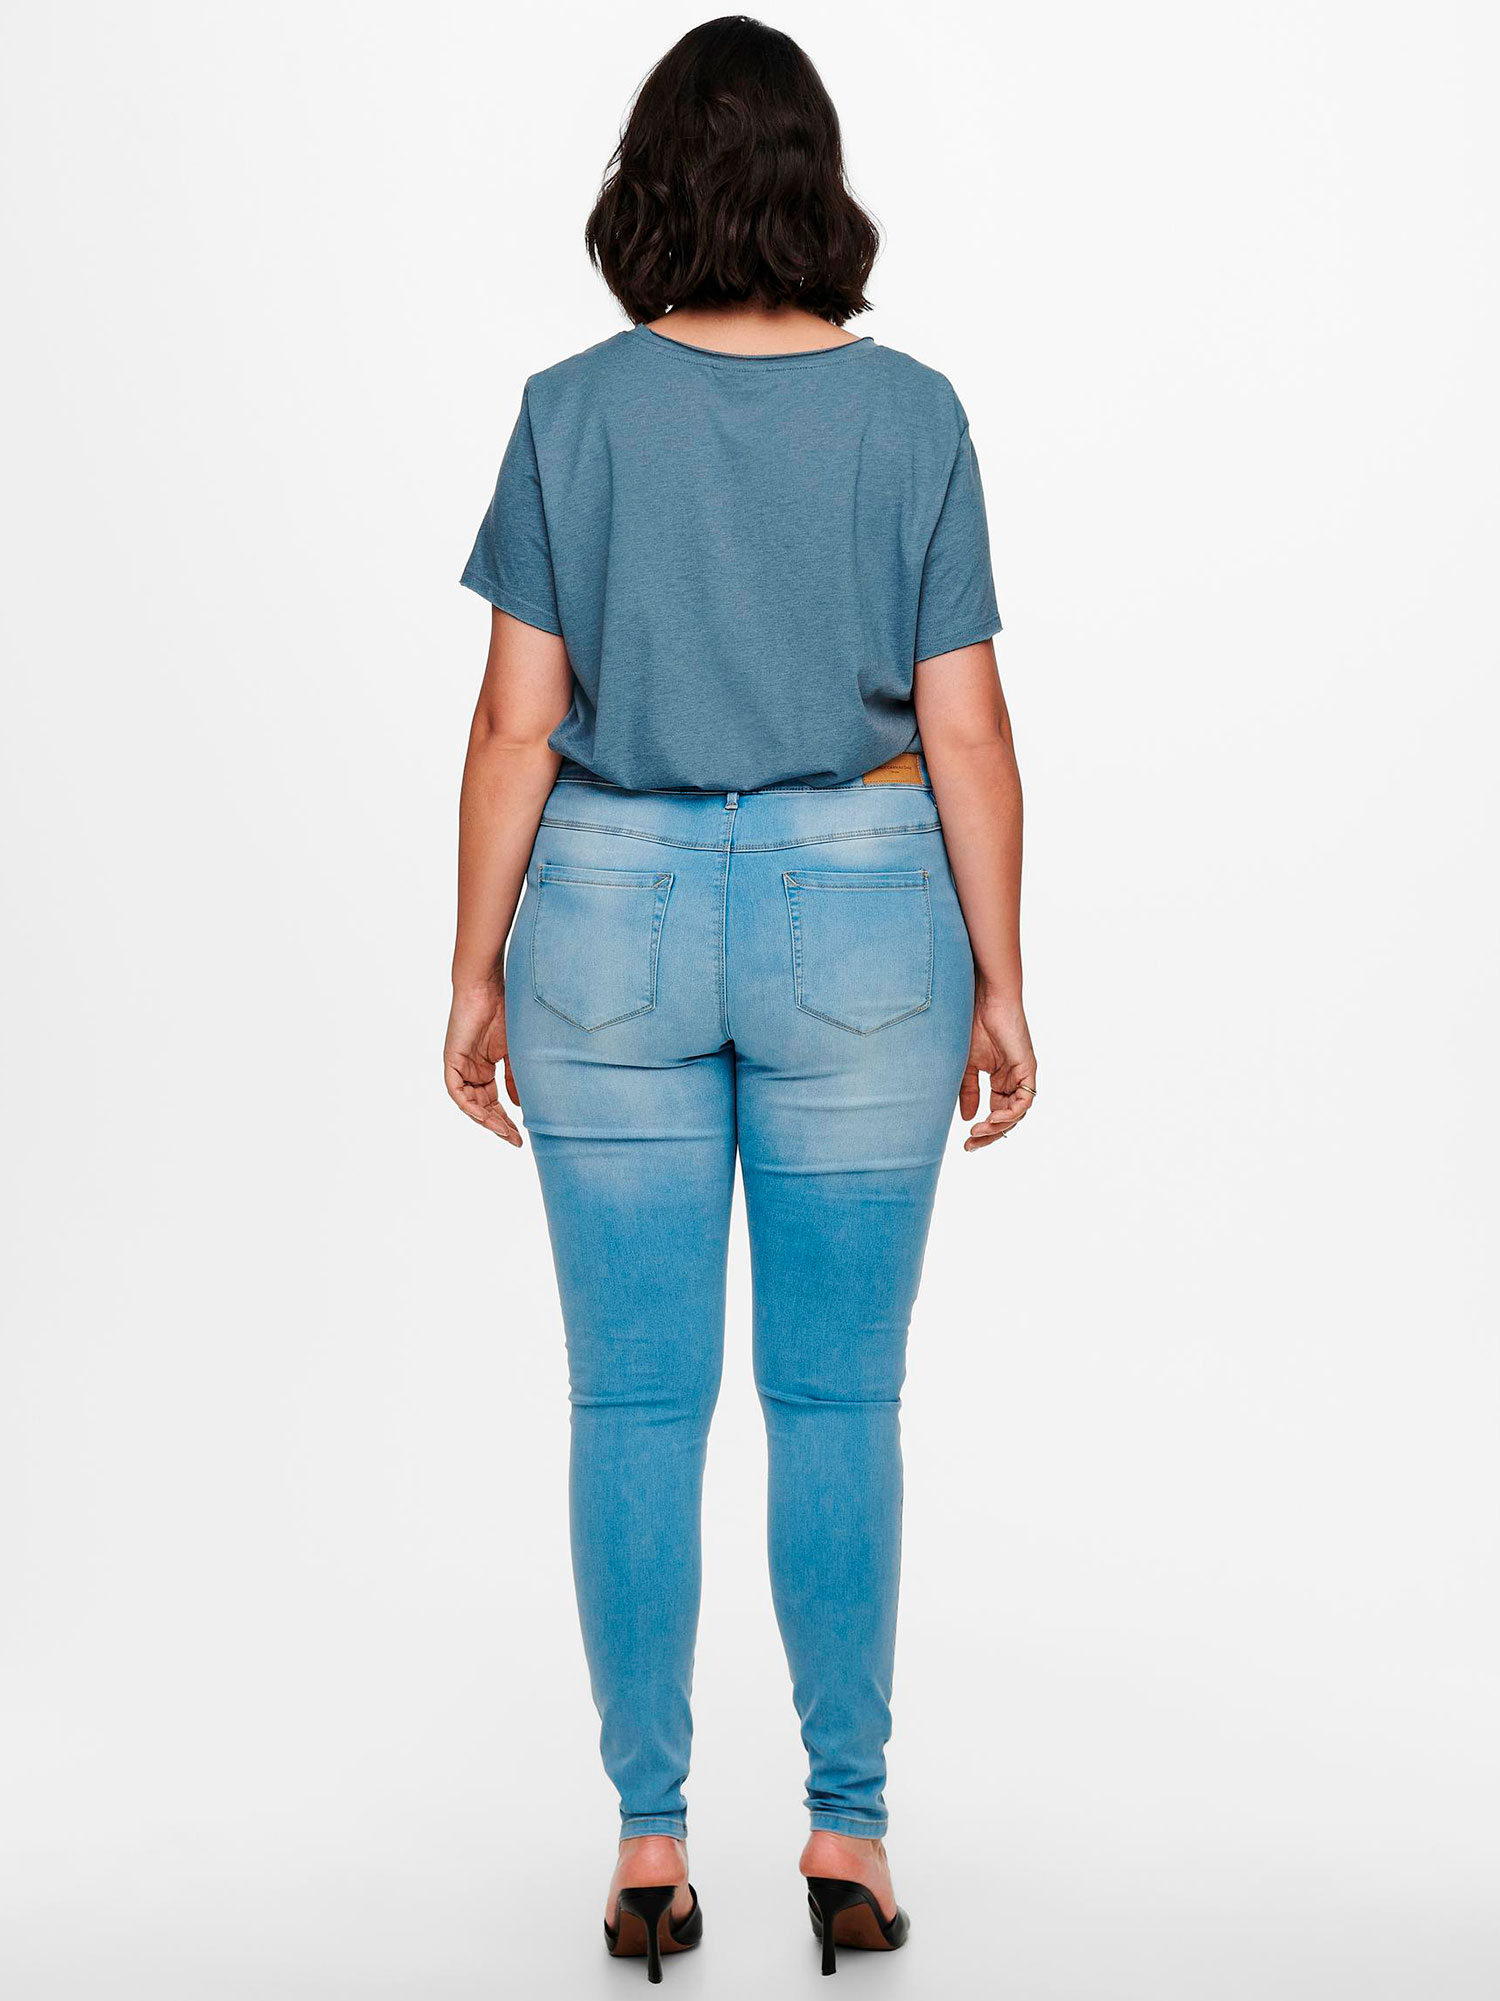 AUGUSTA - Ljusblå jeans i stretchig bomullsdenim fra Only Carmakoma